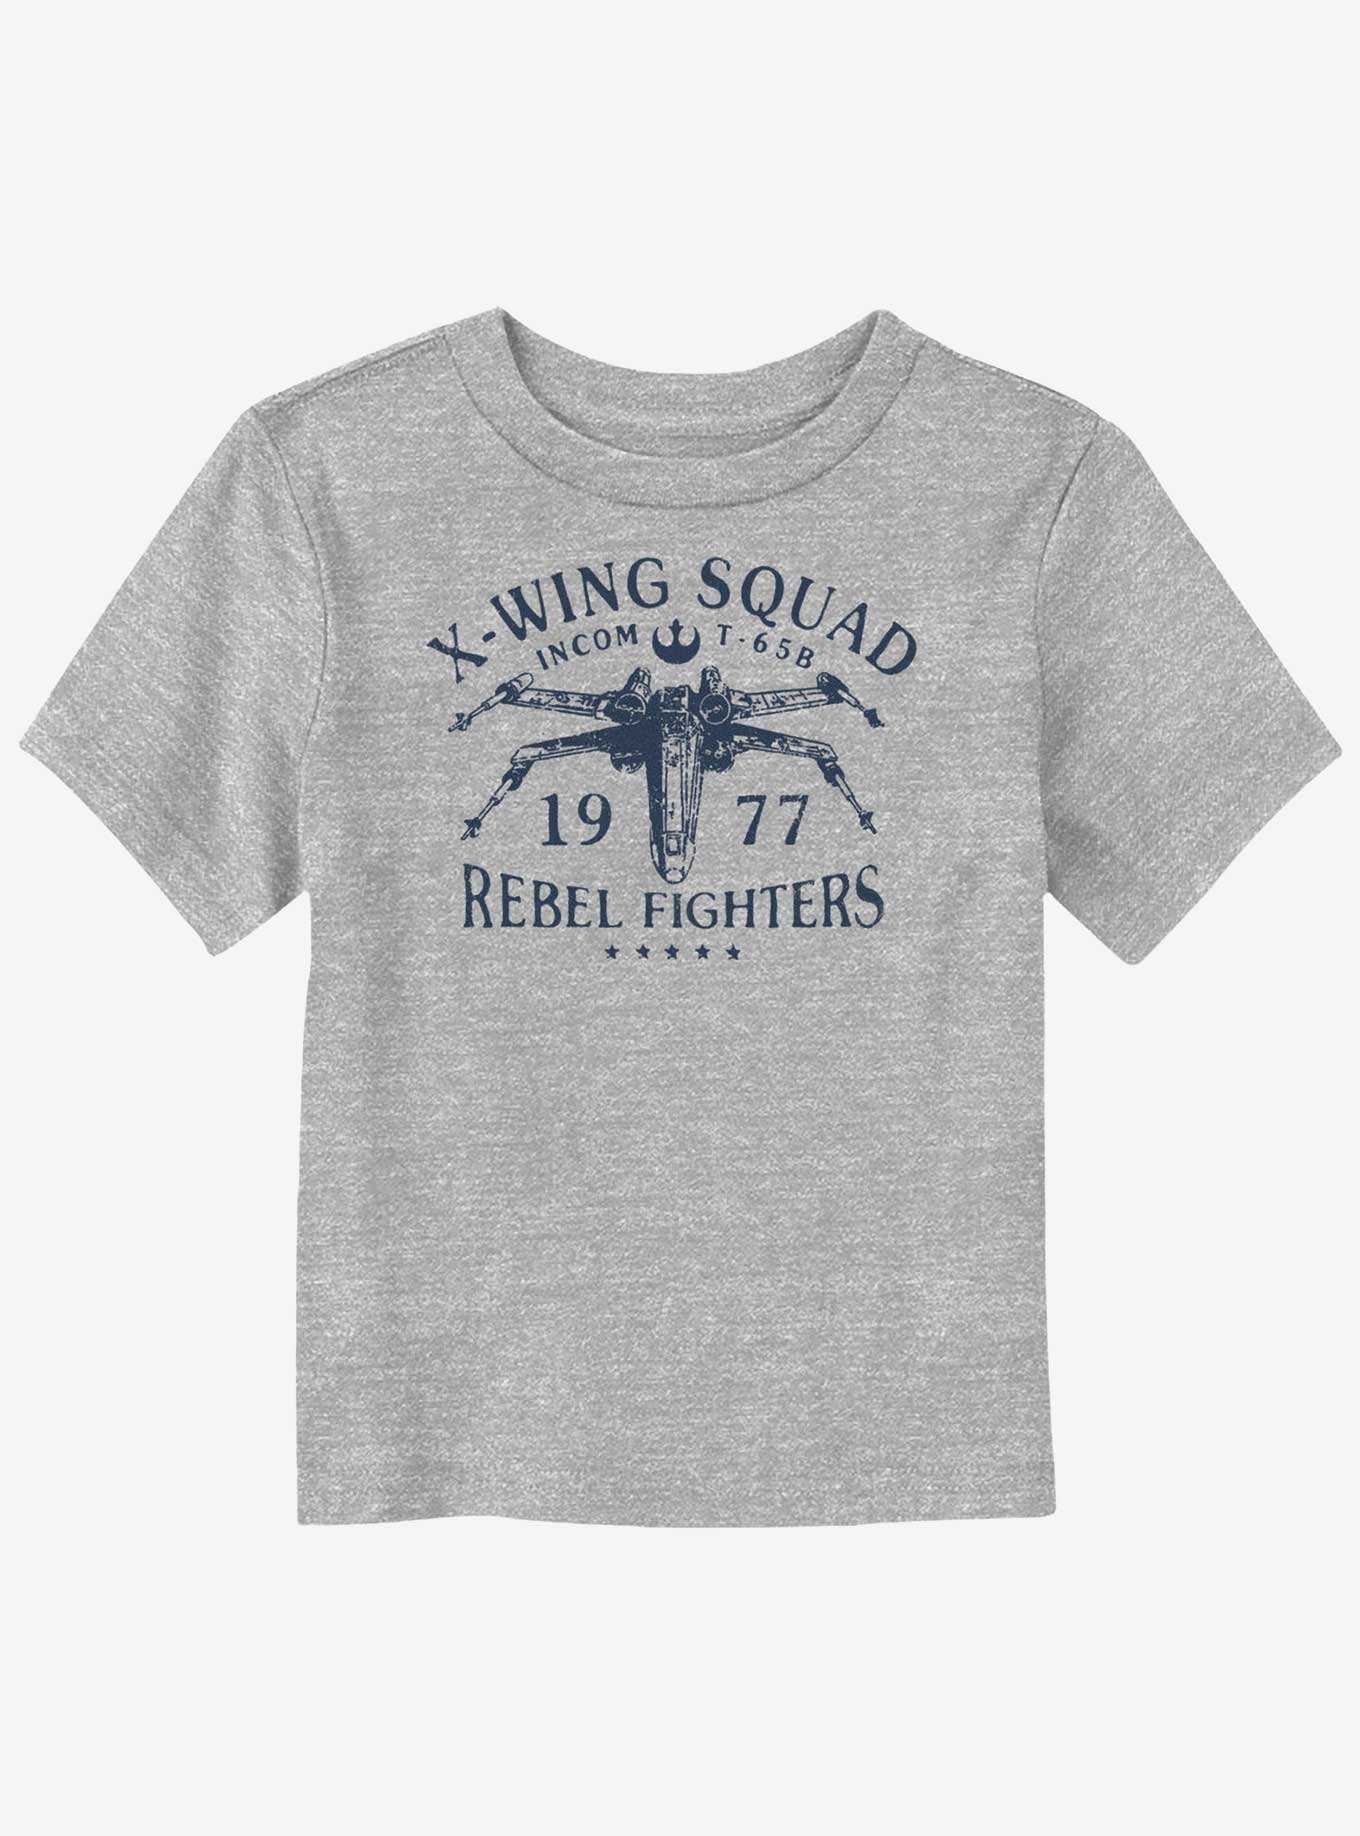 Star Wars X Wing Squad Rebel Fighters Toddler T-Shirt, , hi-res